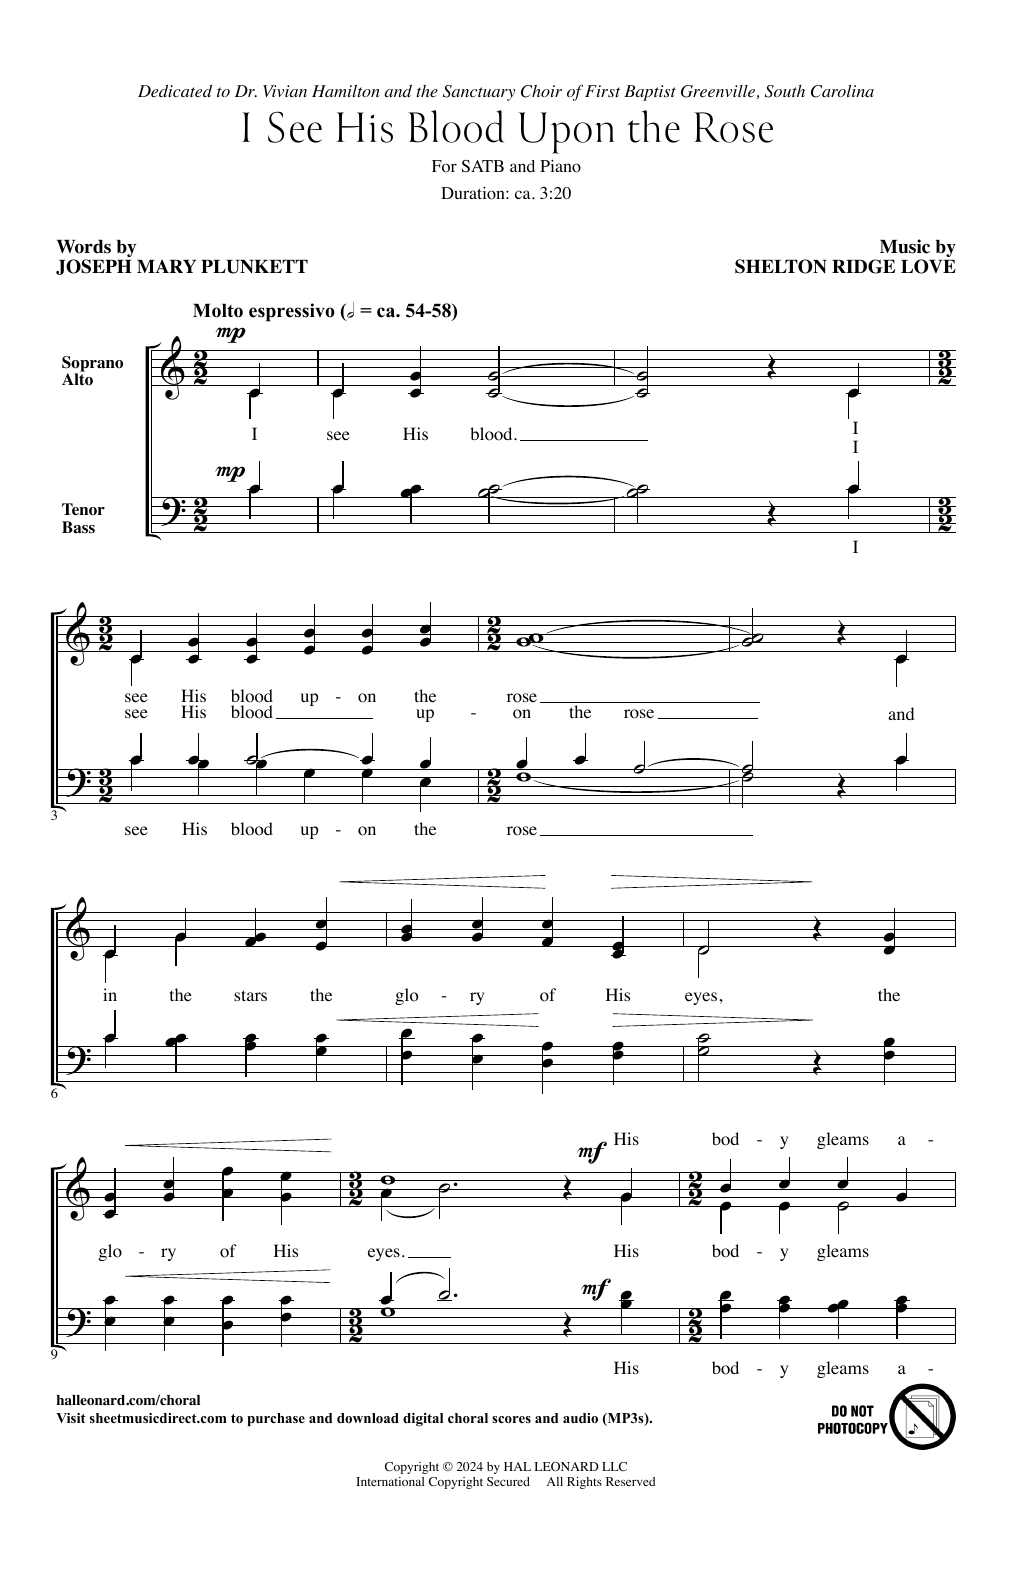 Shelton Ridge Love I See His Blood Upon The Rose sheet music notes printable PDF score